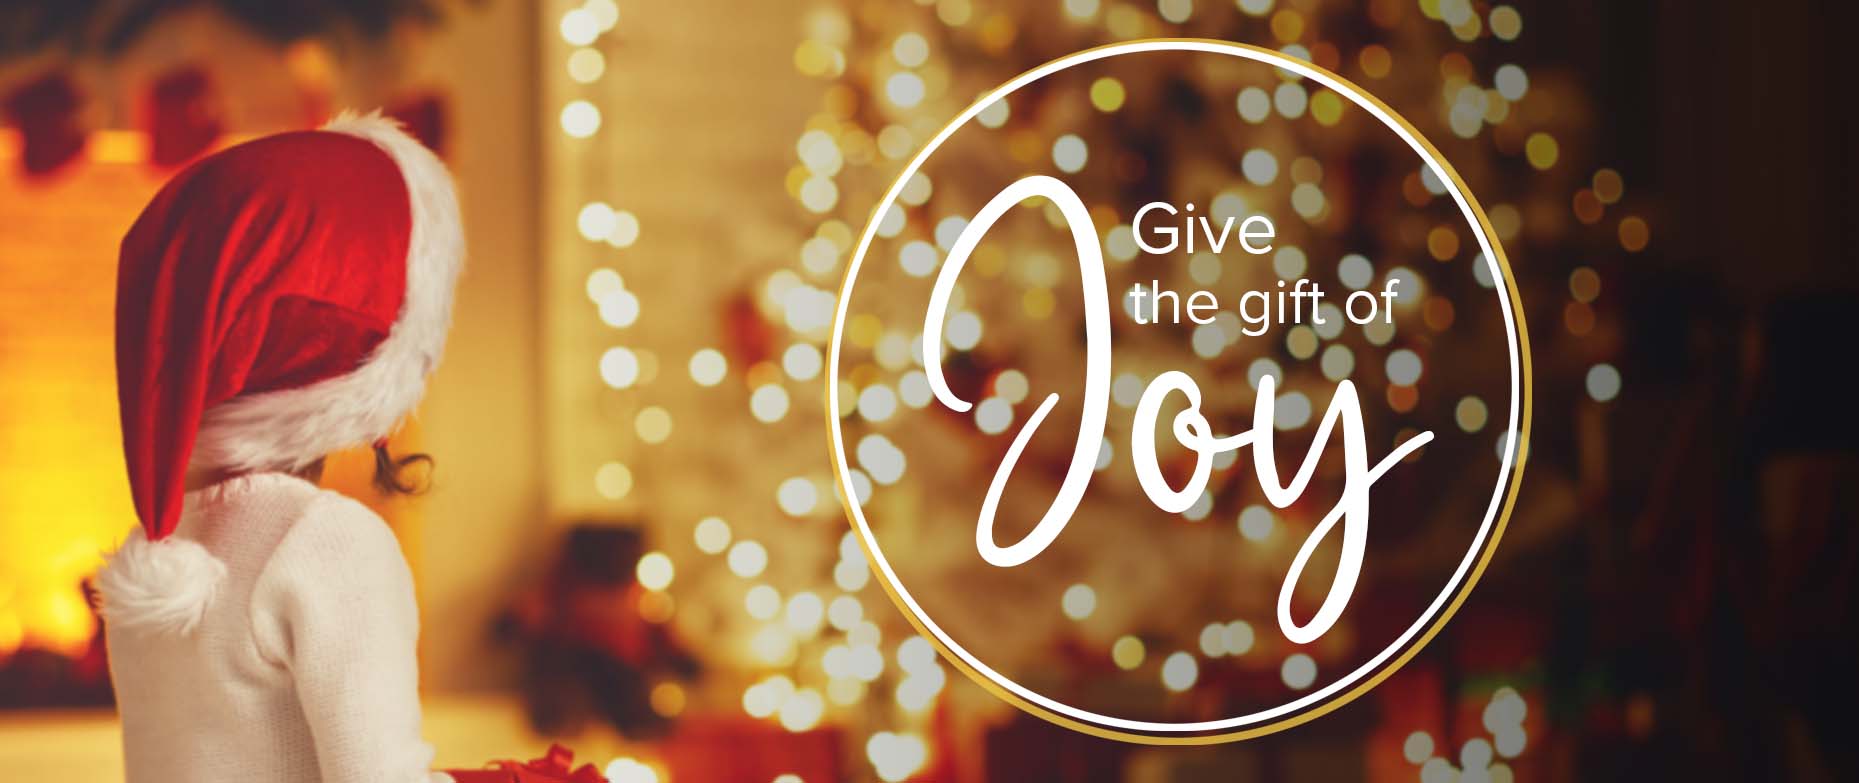 Give the gift of joy this holiday season